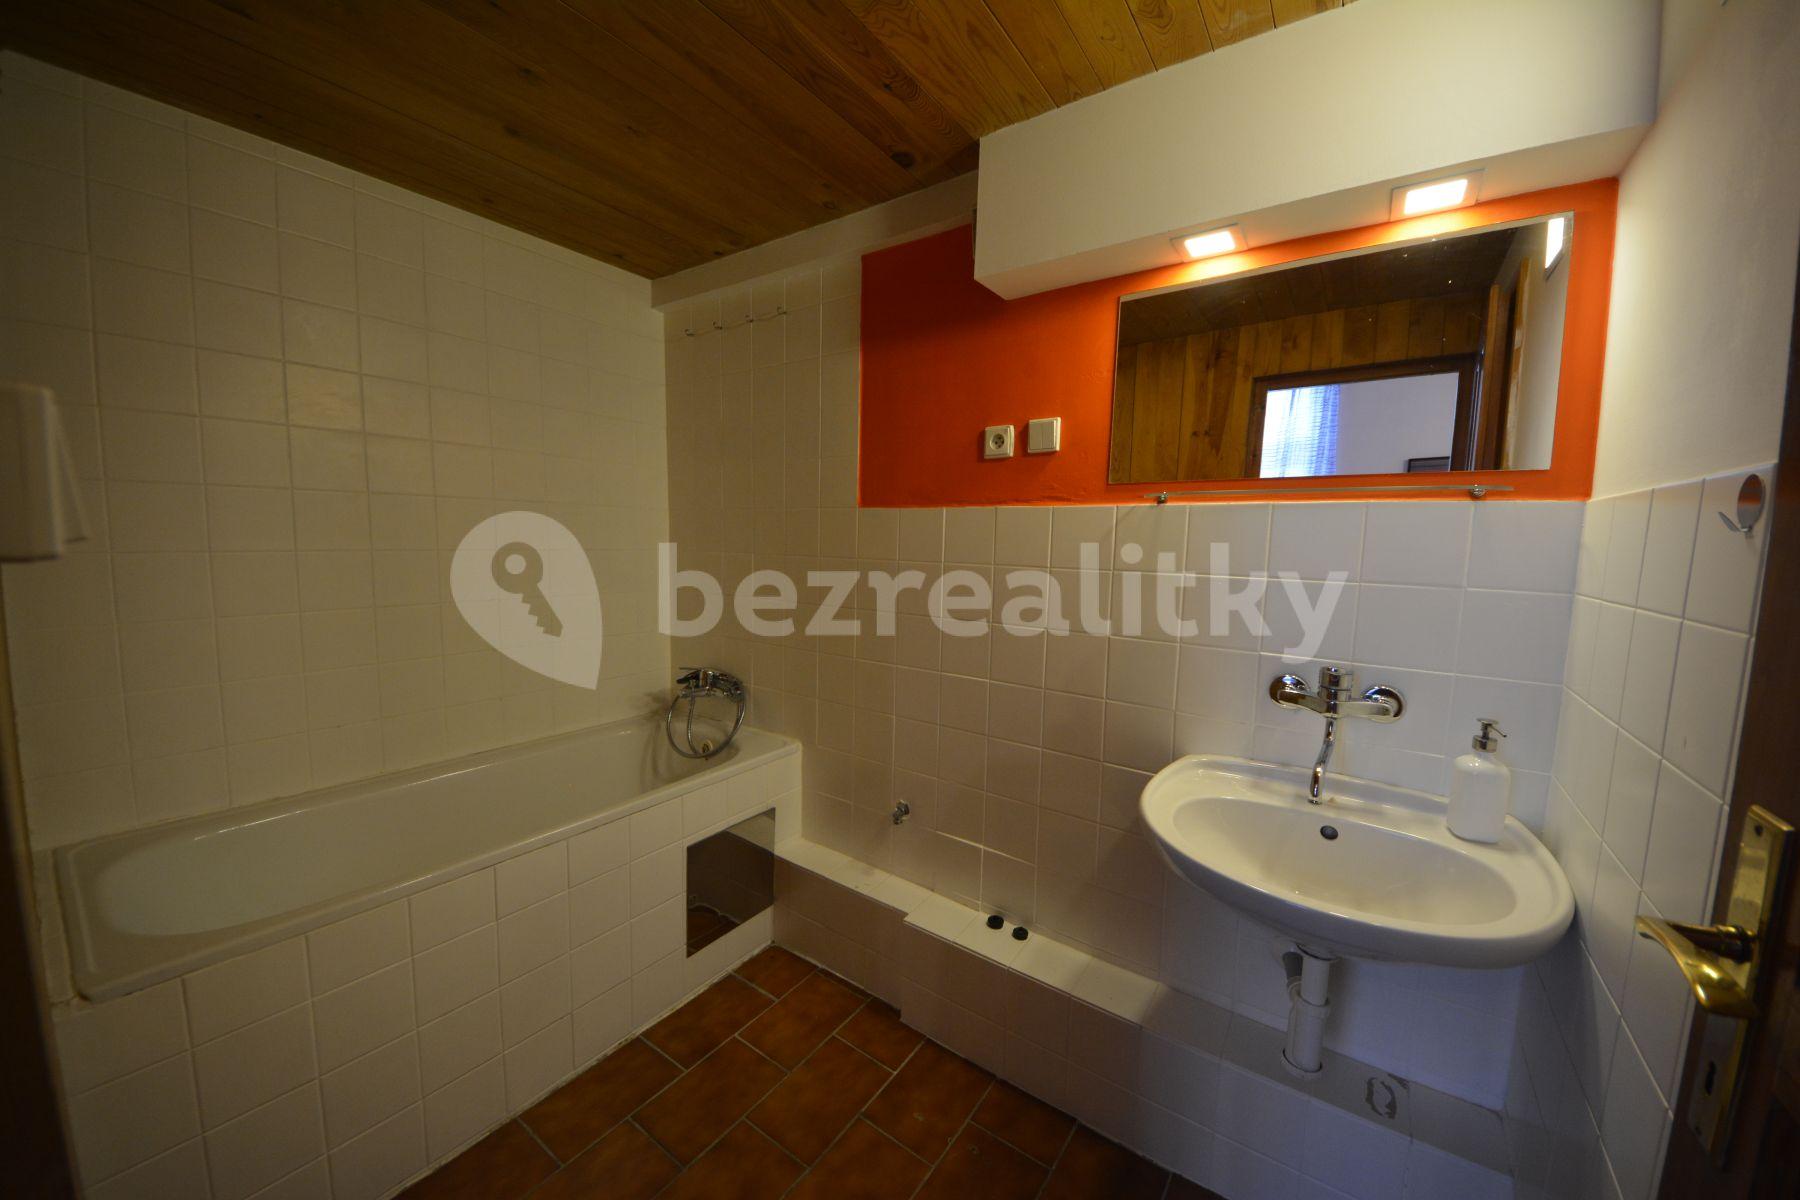 1 bedroom with open-plan kitchen flat to rent, 43 m², Šaldova, Prague, Prague